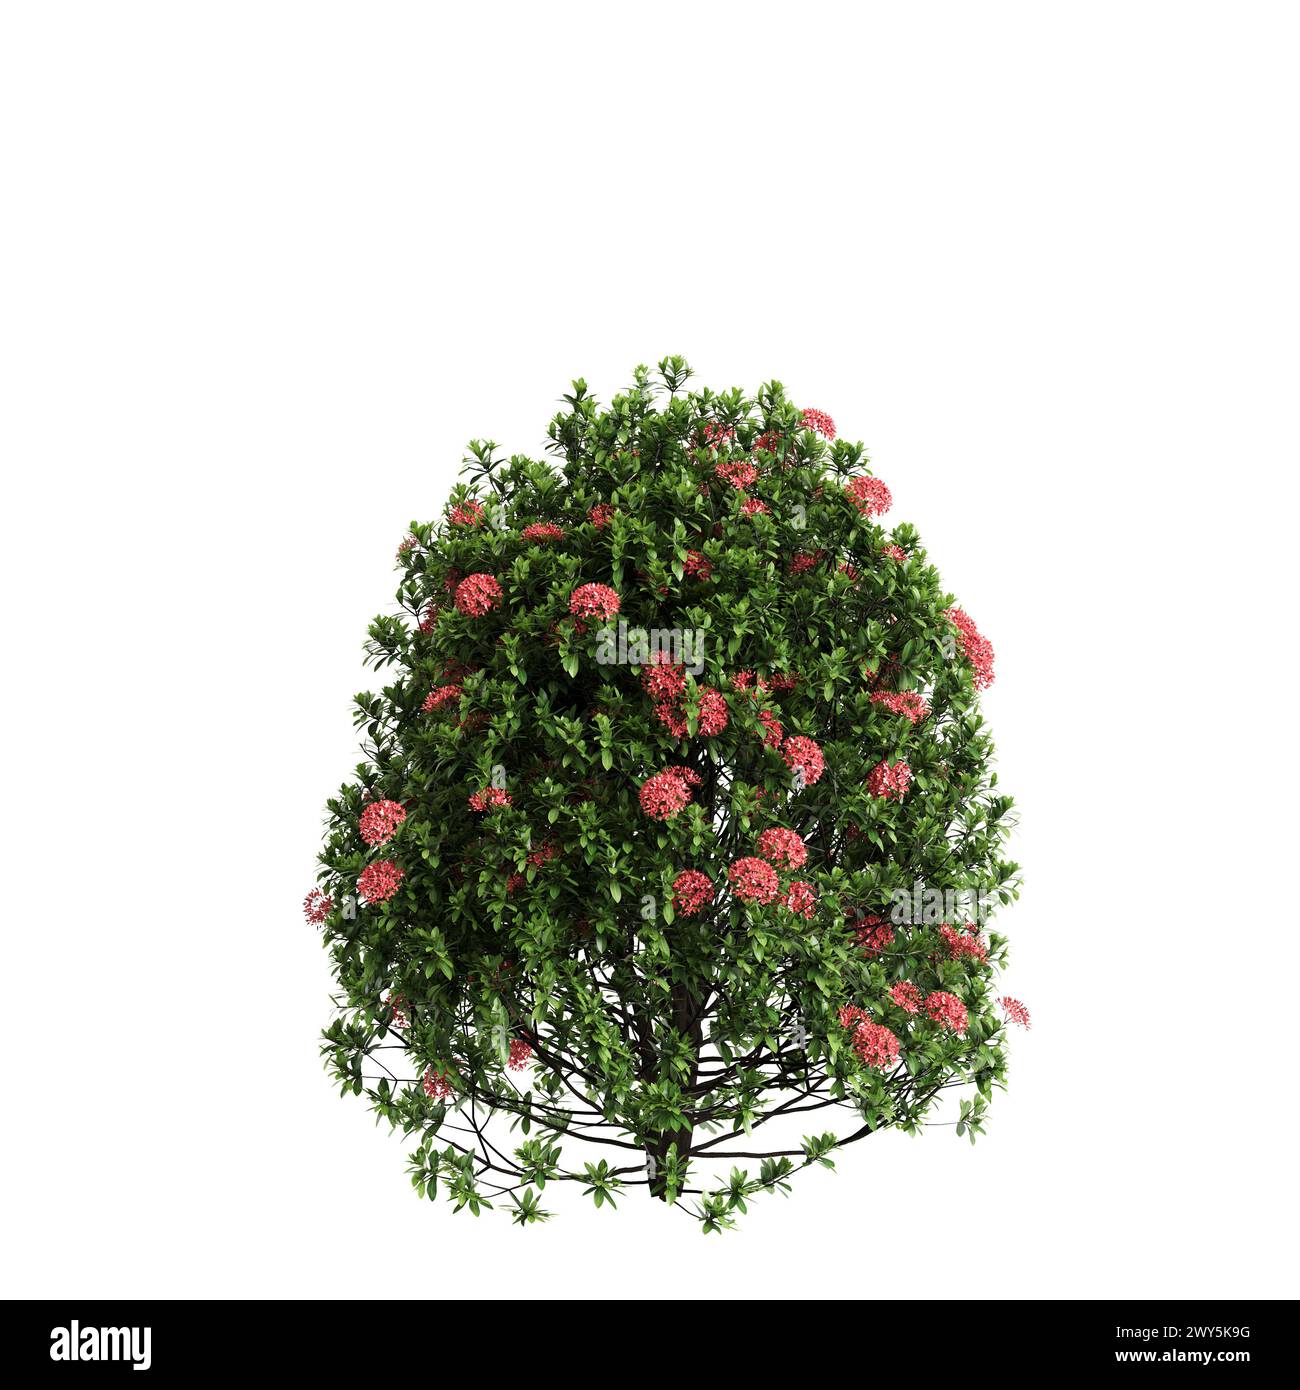 3d illustration of Ixora taiwanensis bush isolated on black background Stock Photo